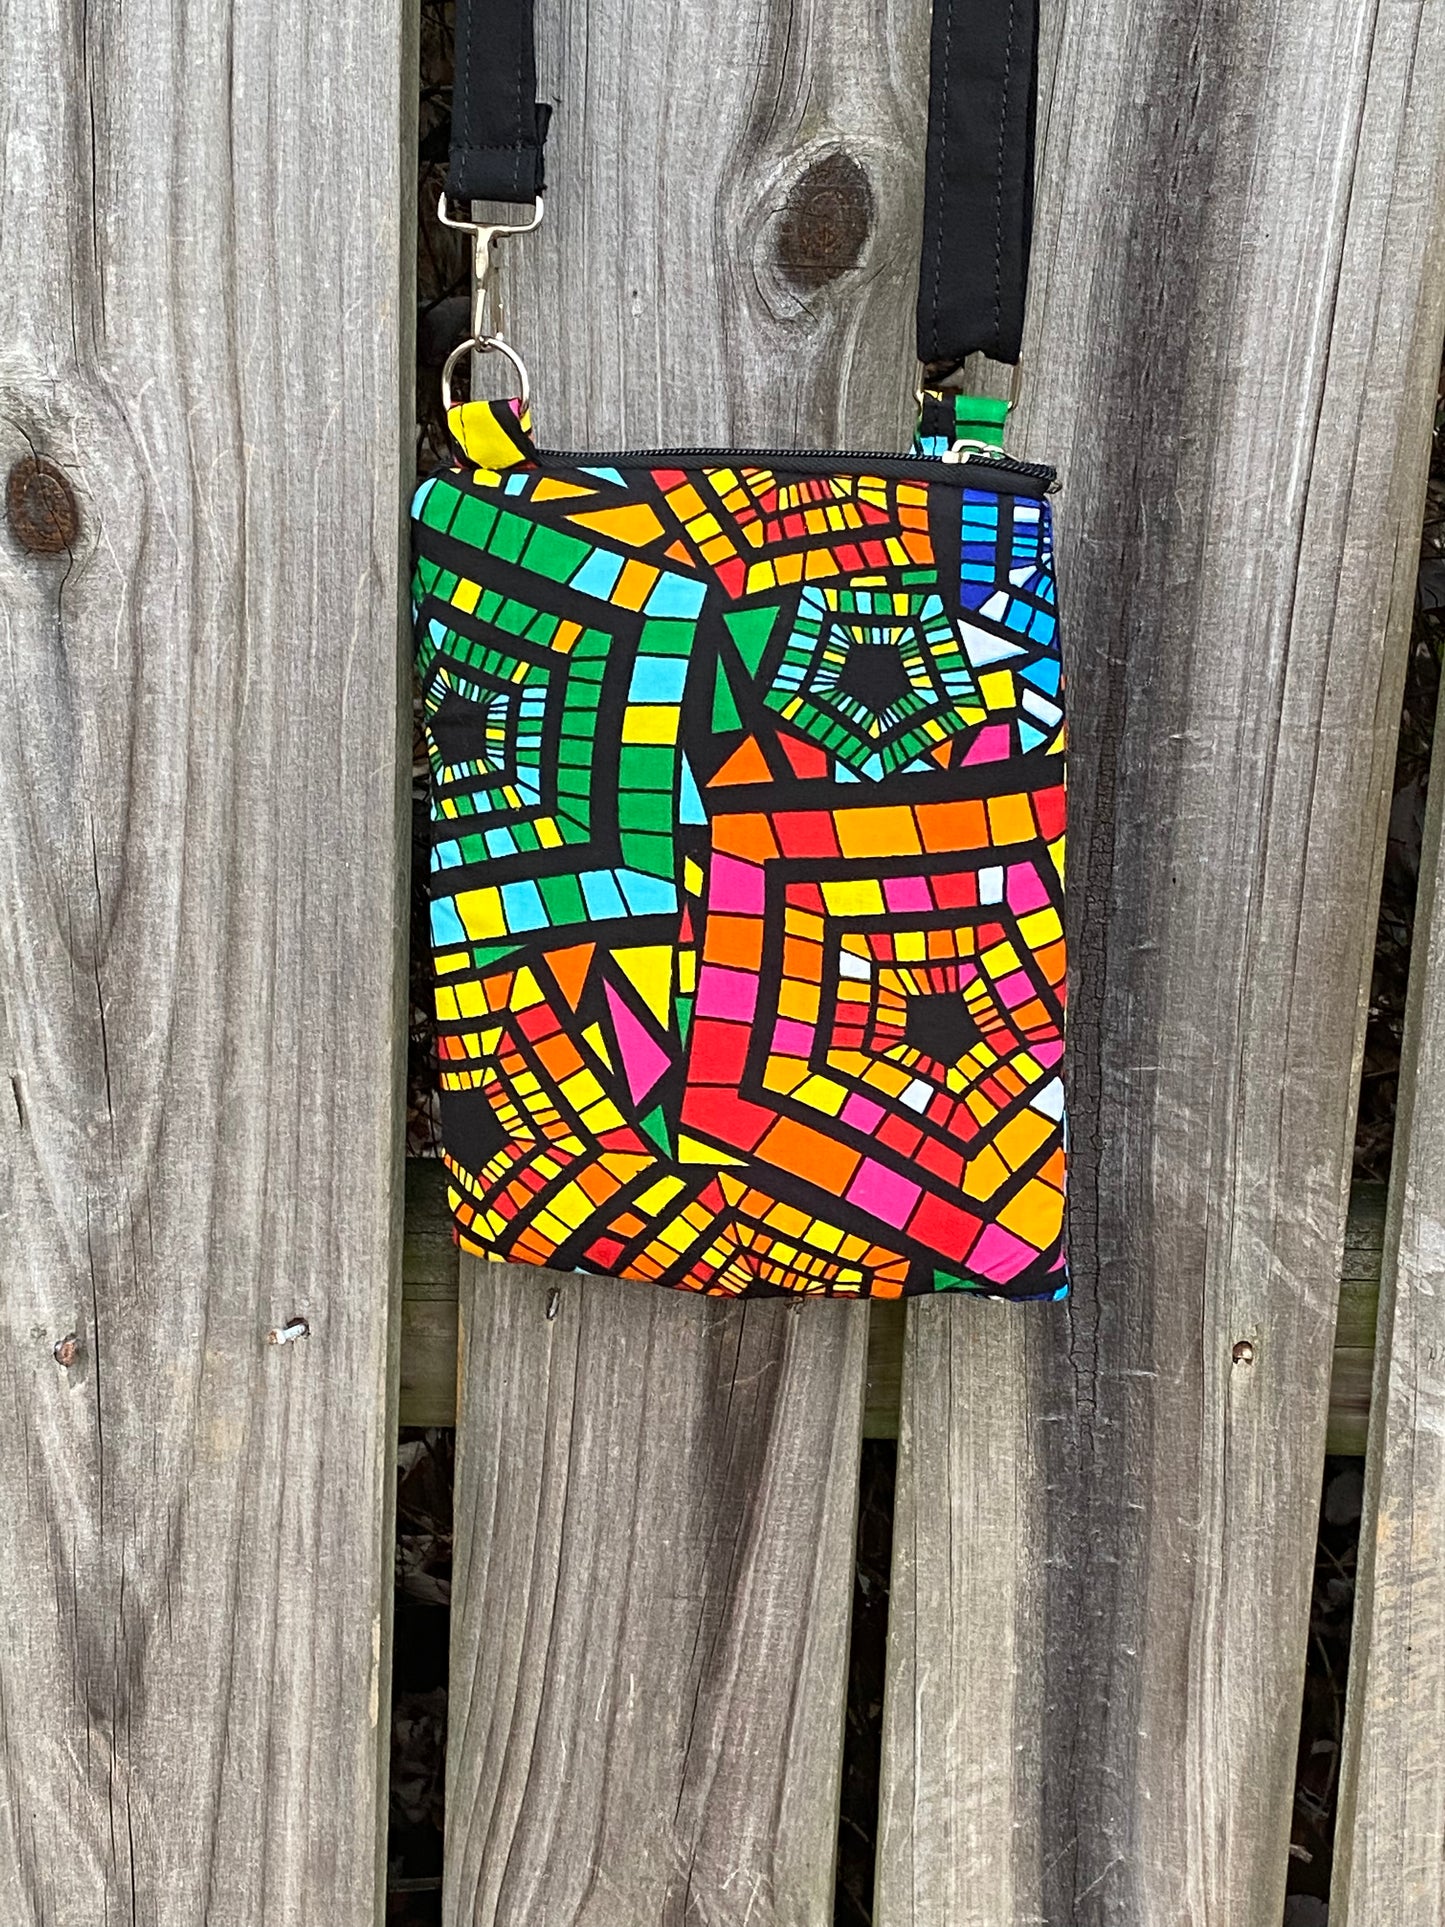 Multicolored Crossbody Bag